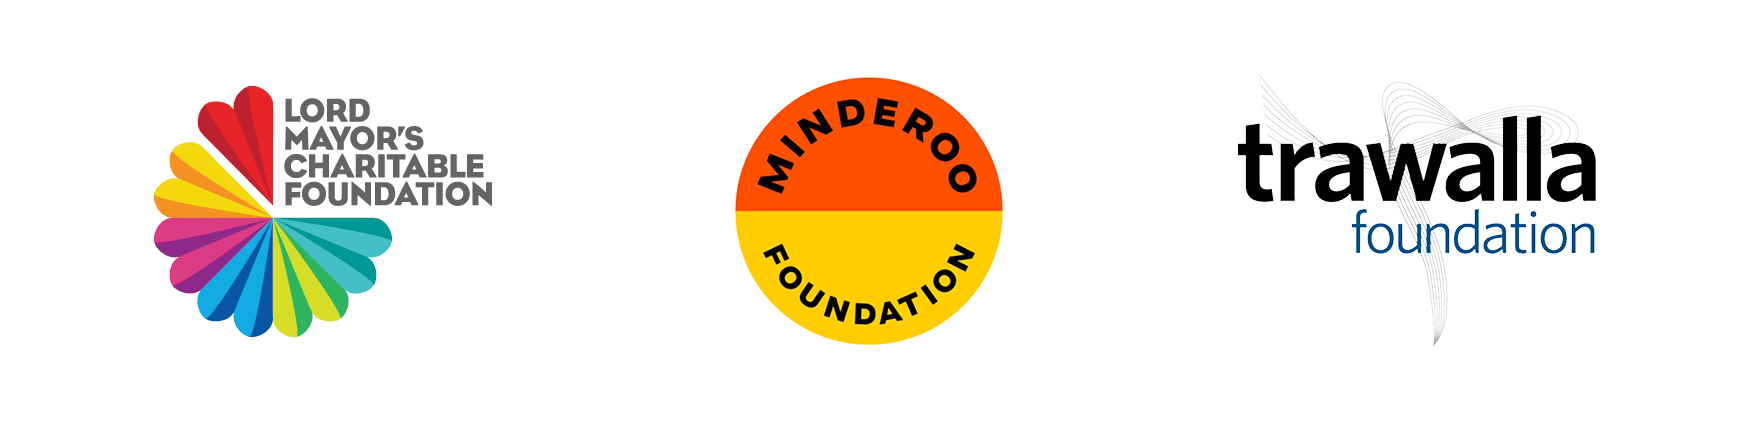 Logos of Lord Mayor's Charitable Foundation, Minderoo Foundation and Trawalla Foundation